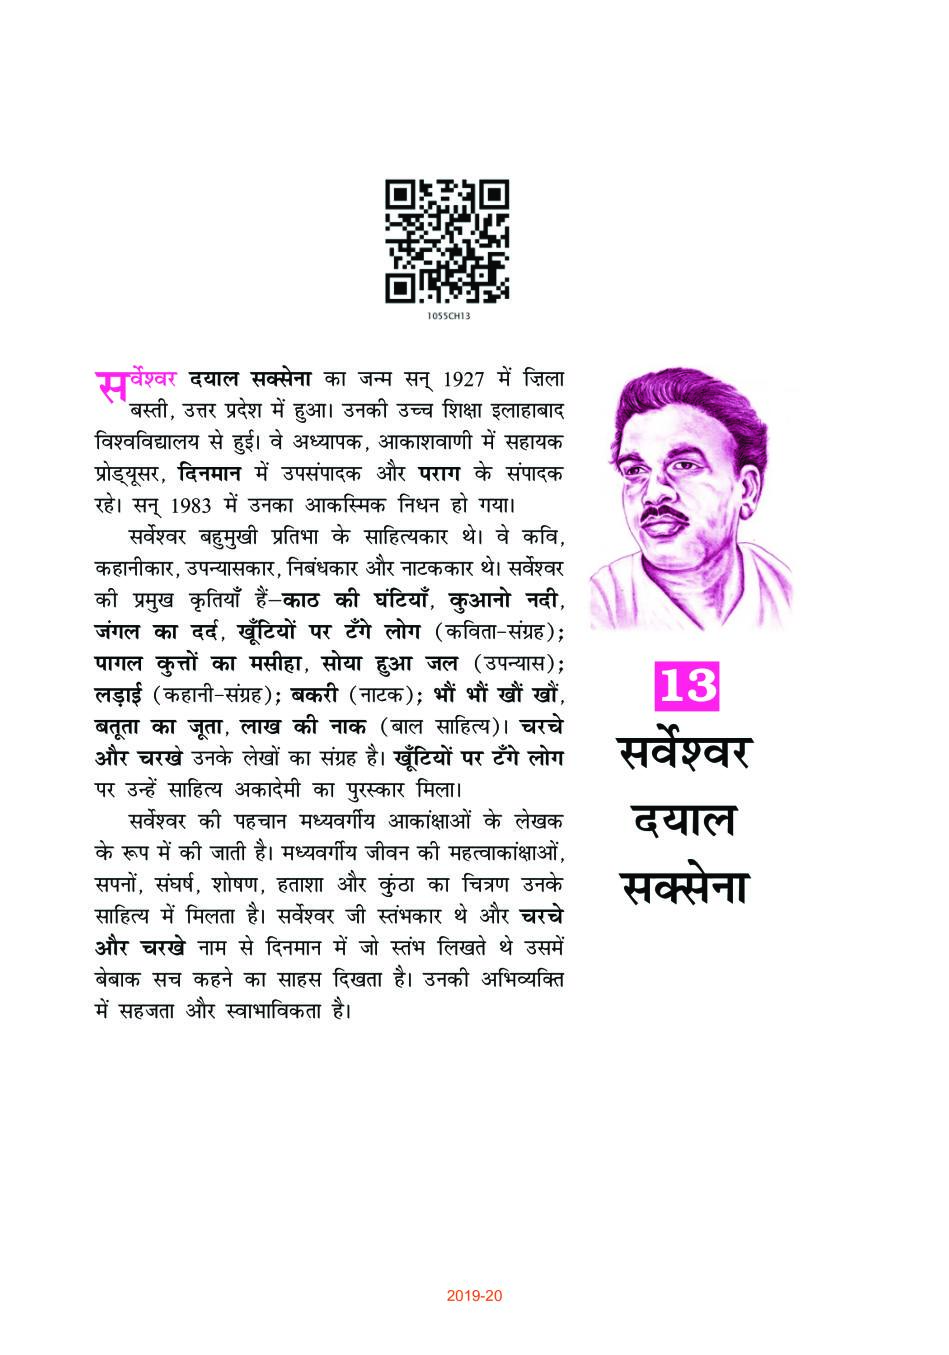 NCERT Book Class 10 Hindi (क्षितिज) Chapter 13 मानवीय करुणा की दिव्य चमक - Page 1